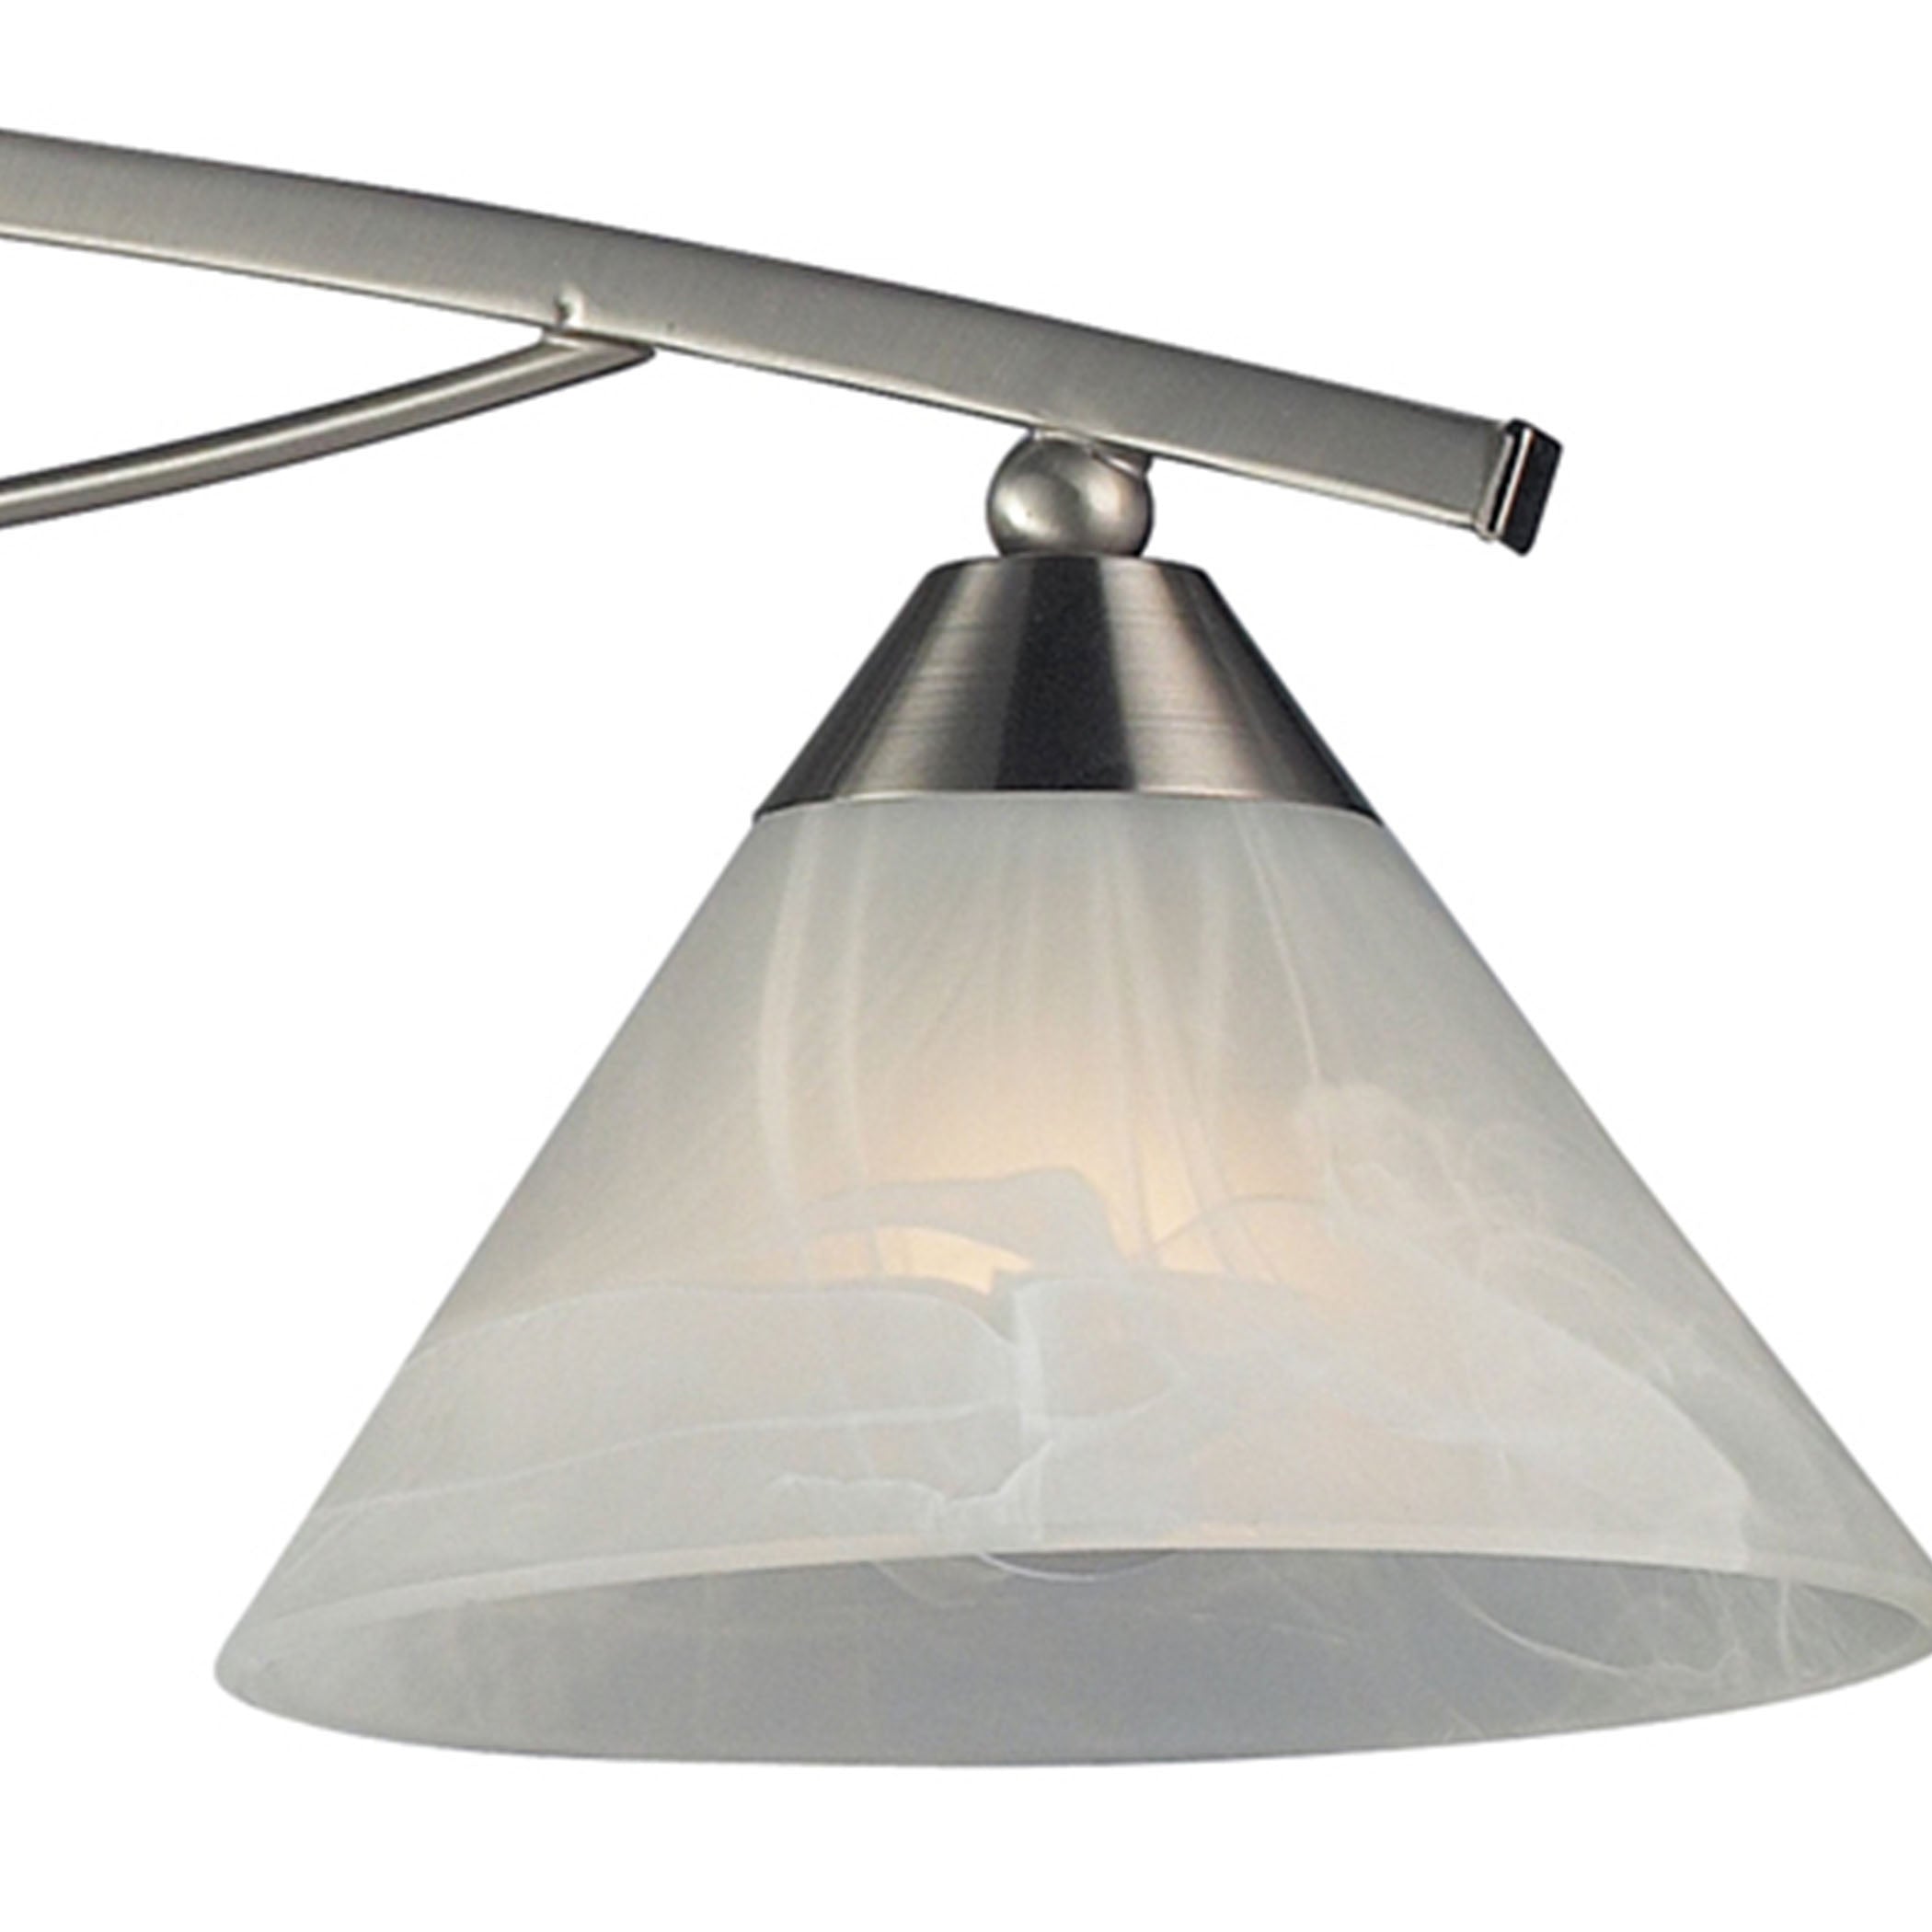 ELK Lighting 17019/4 Elysburg 4-Light Vanity Lamp in Satin Nickel with White Marbleized Glass